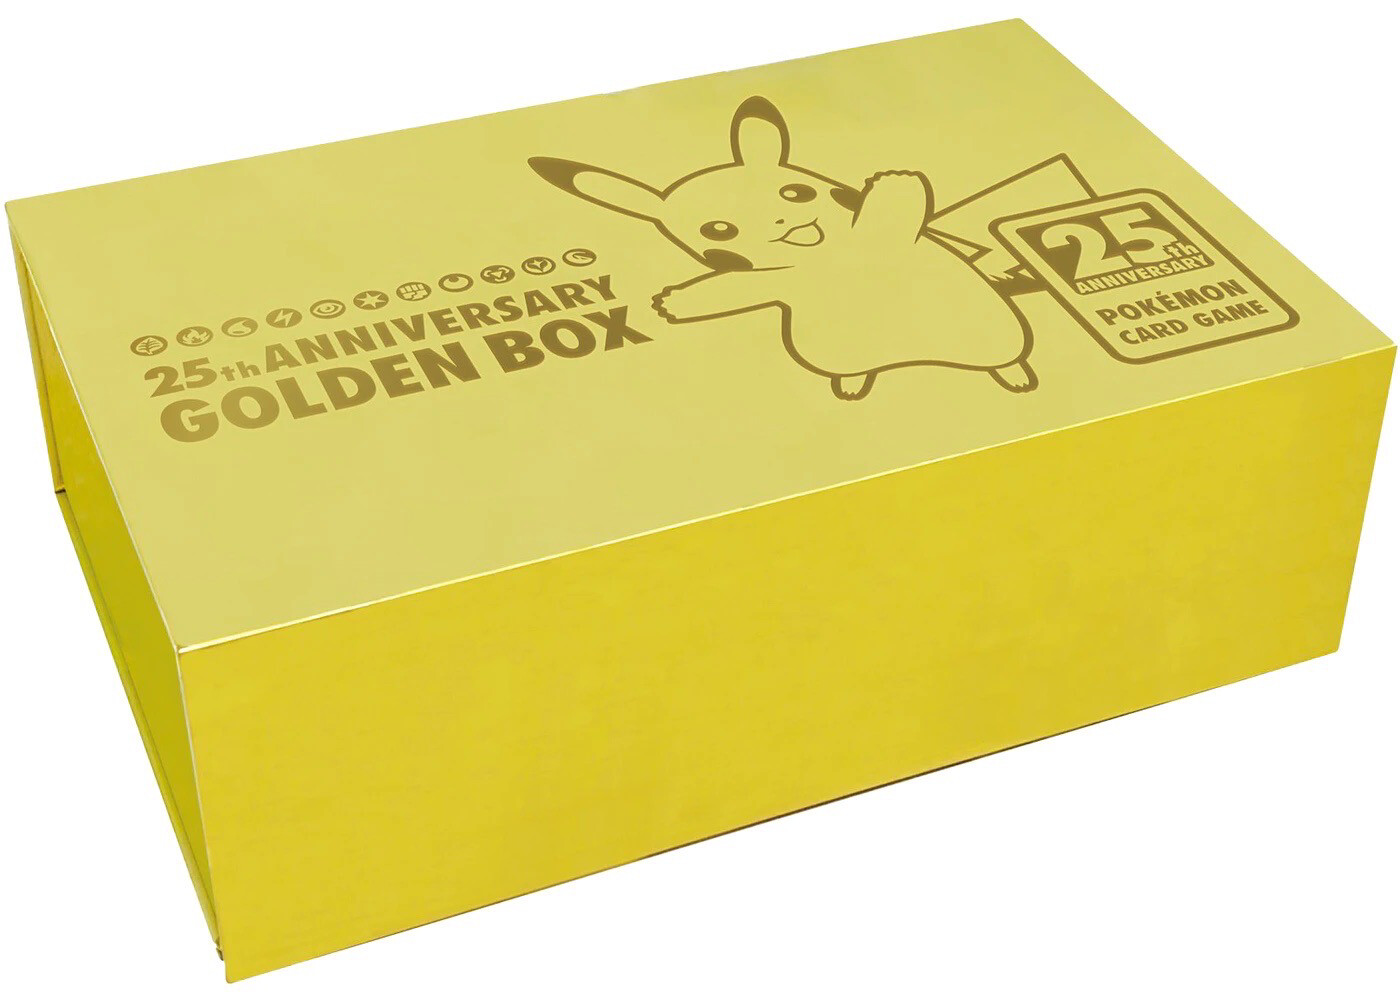 Pokémon TCG Japanese 25th Anniversary Golden Box